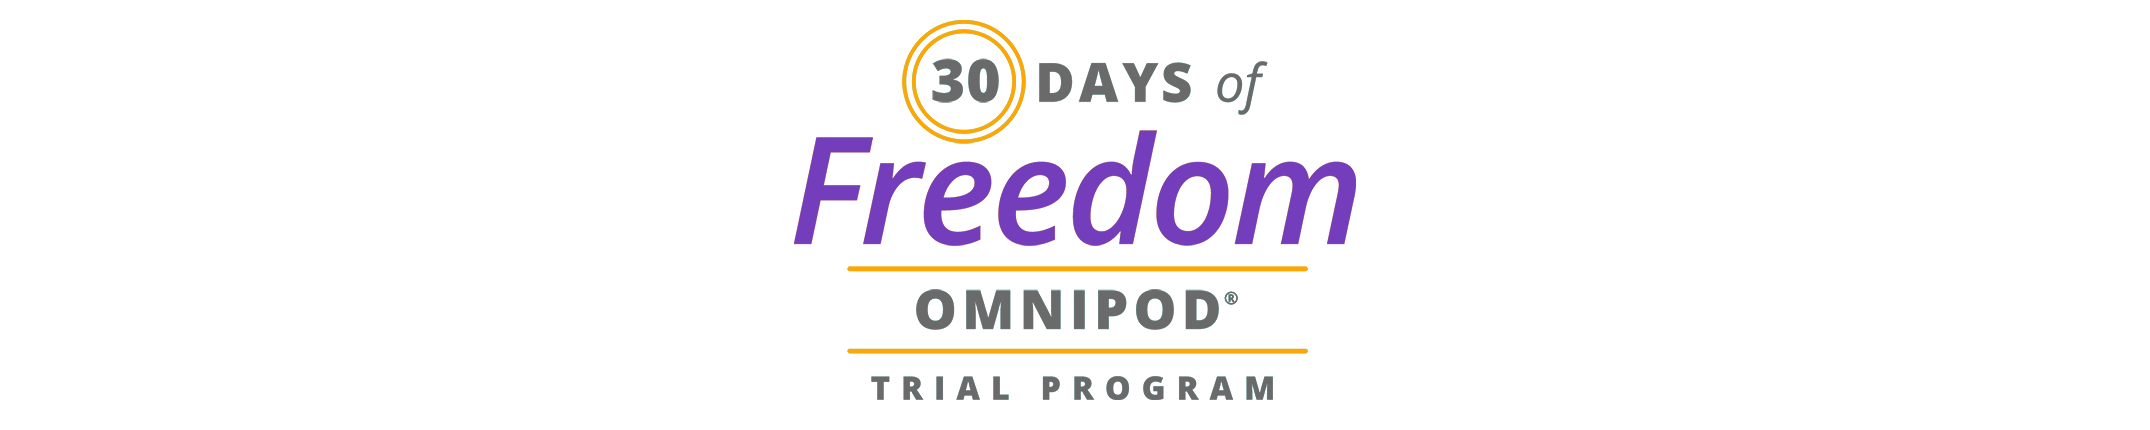 30 Days of Freedom - Omnipod Trial Program